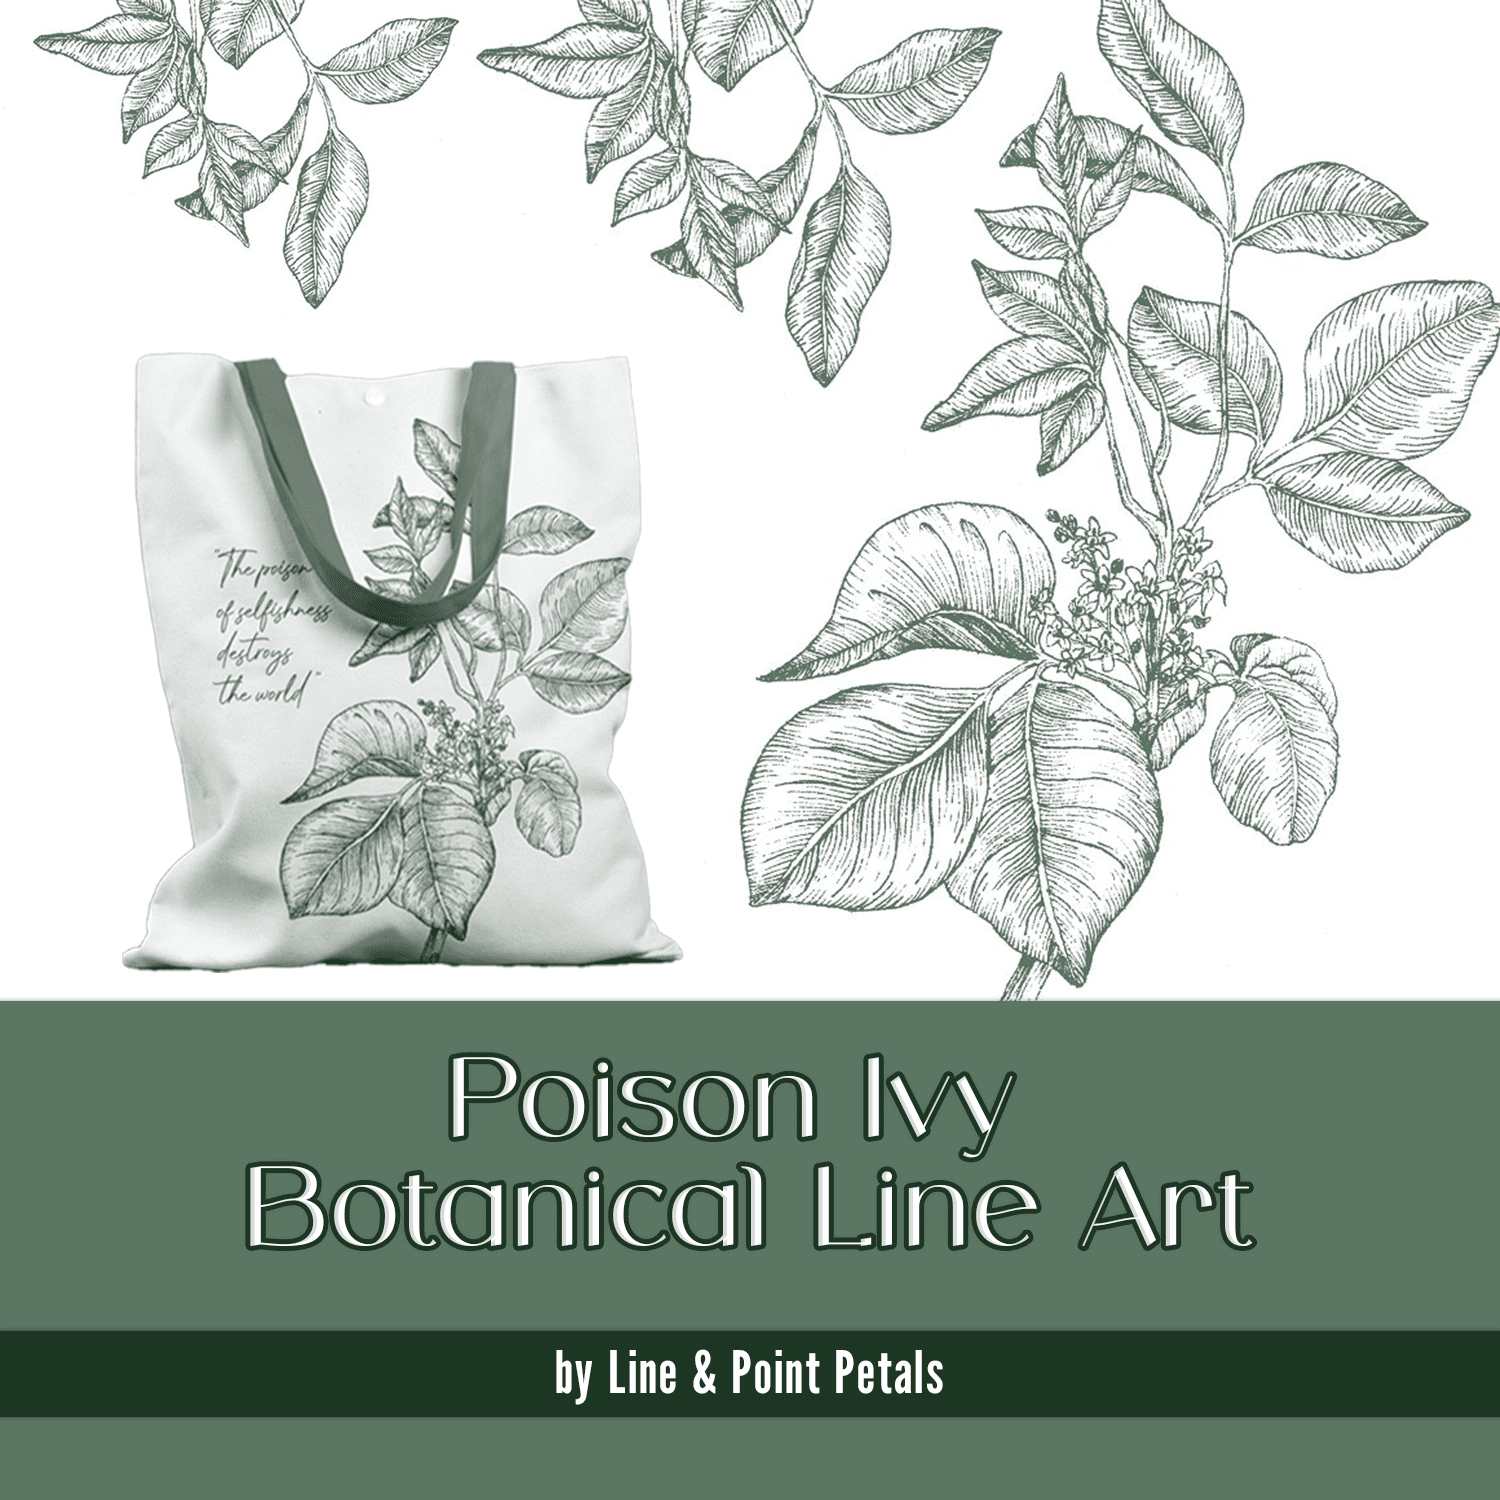 Poison Ivy Botanical Line Art cover.